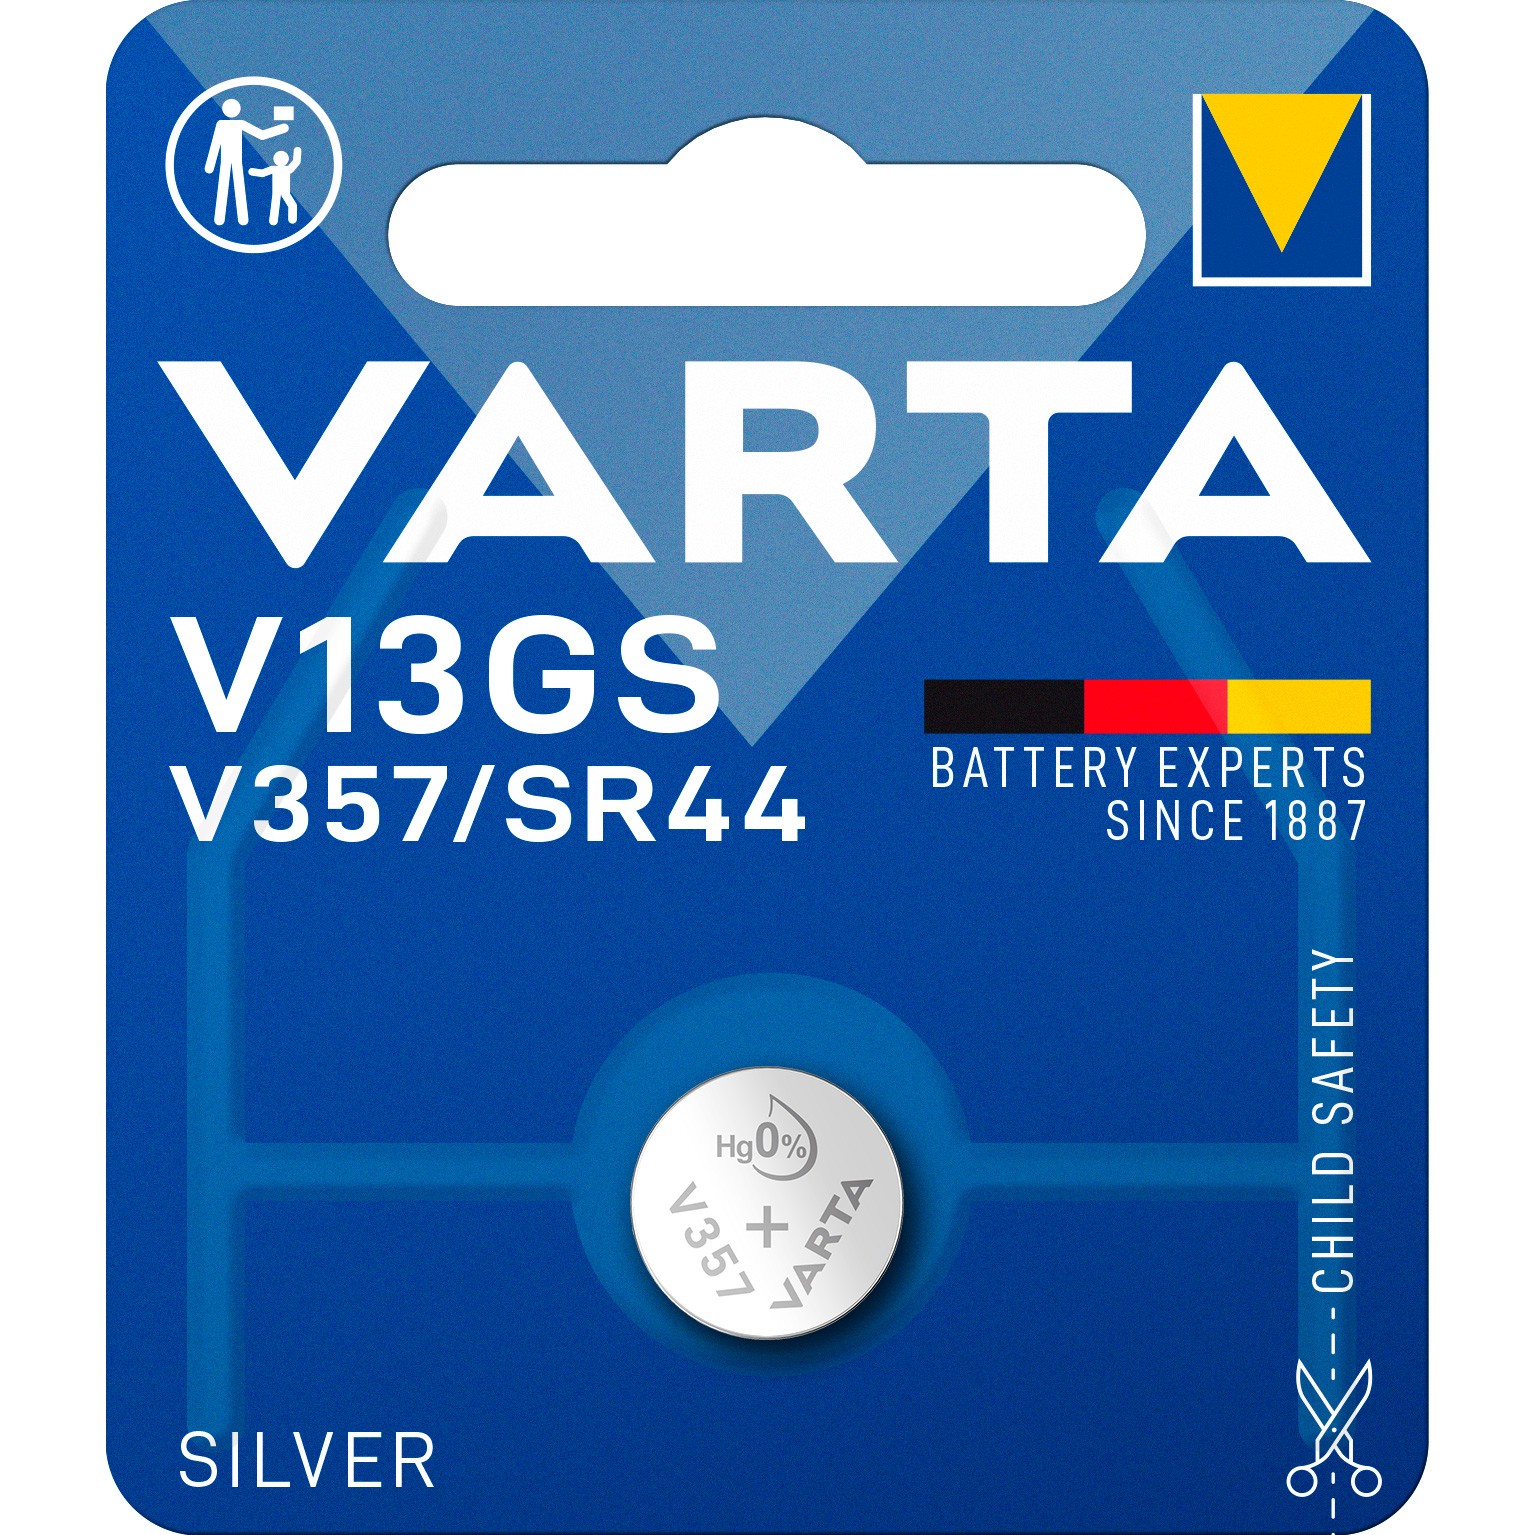 VARTA knapcellebatteri V13GS/V357/SR44 1 stk